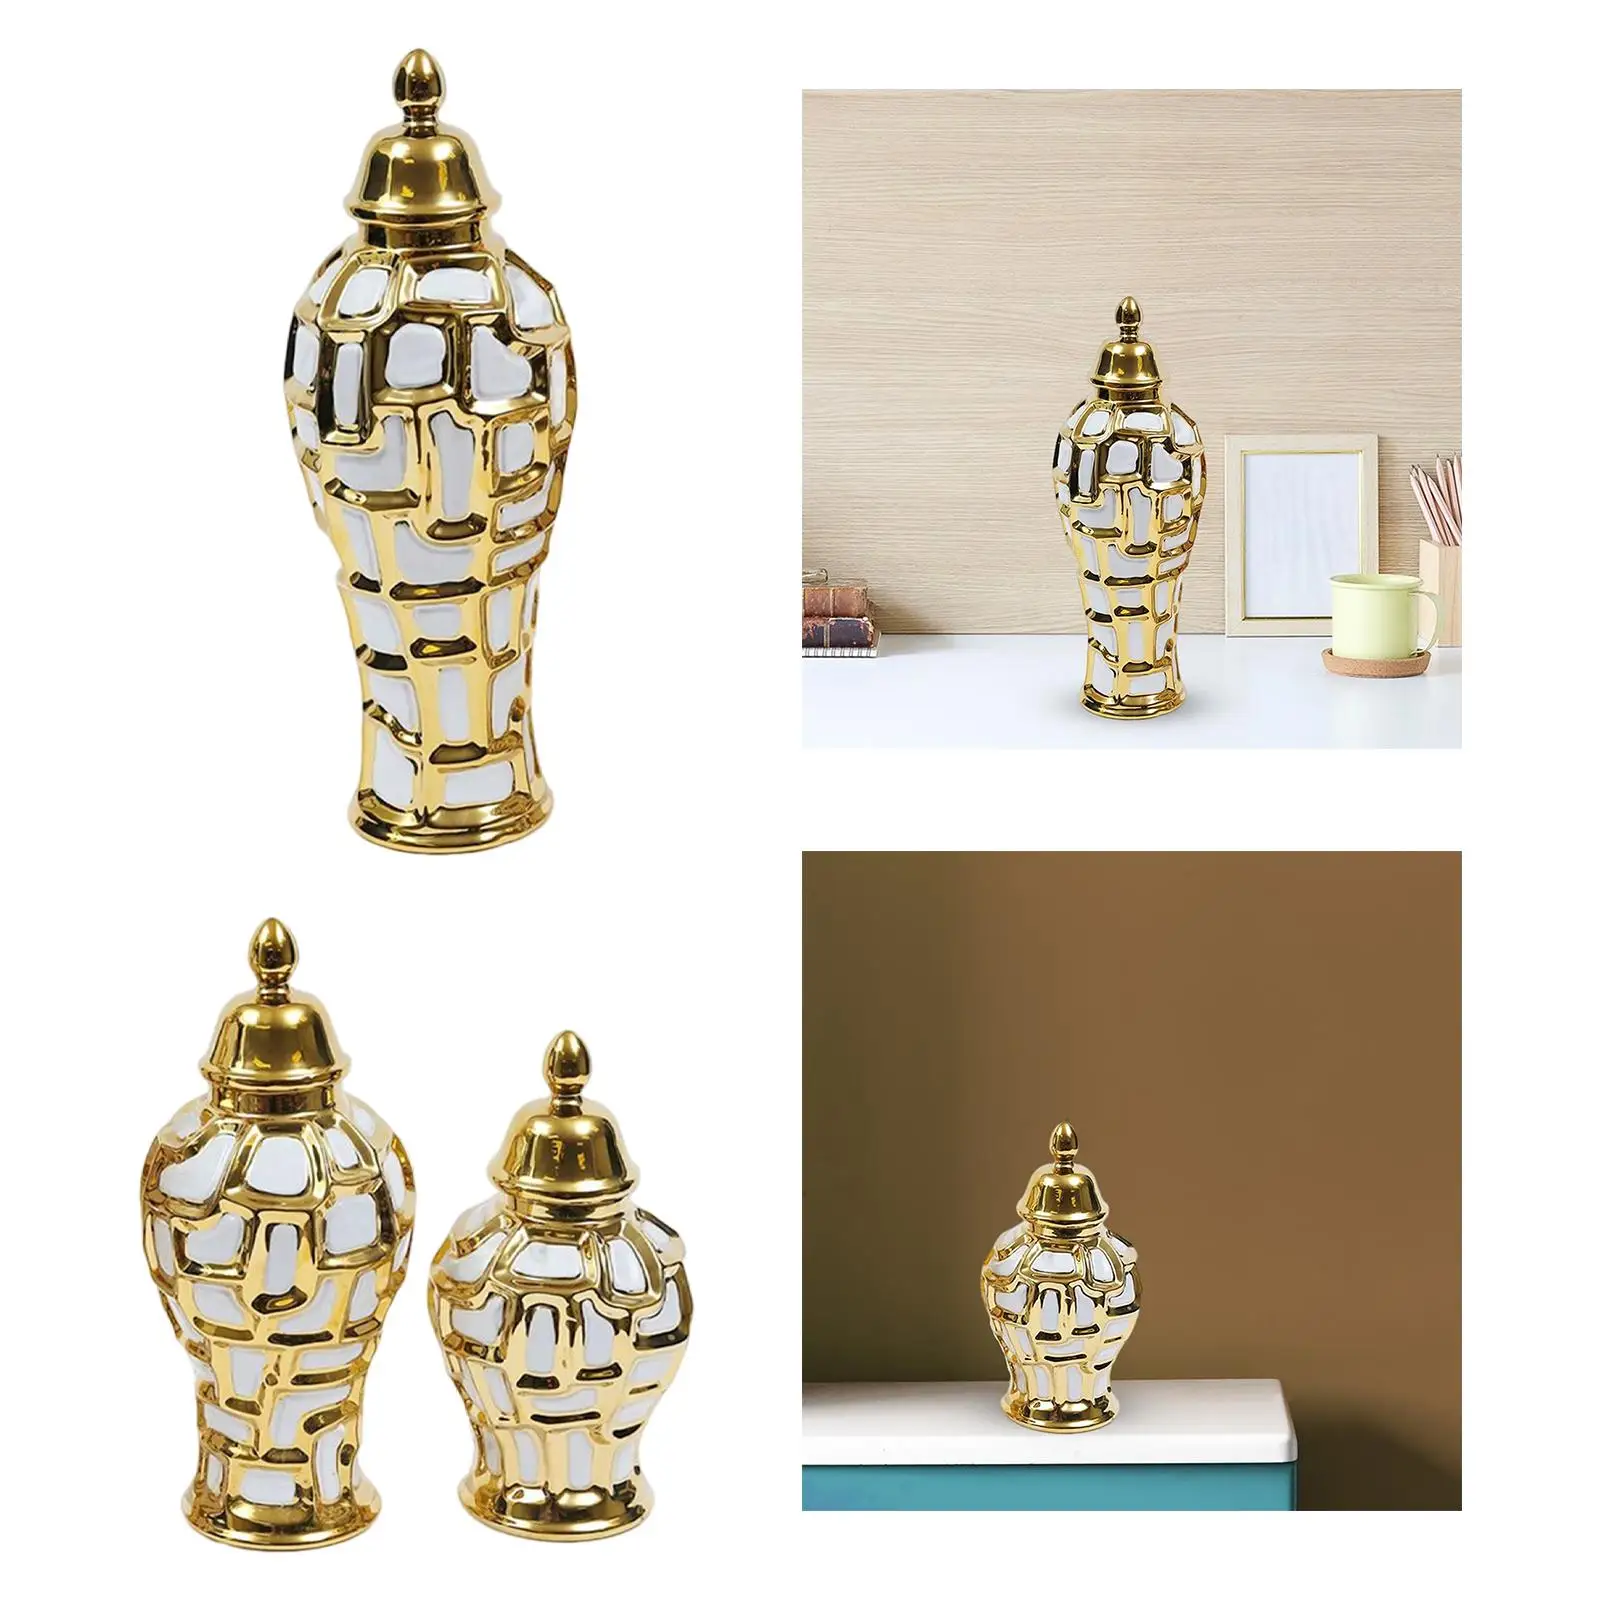 Modern Ceramic General Jar with Lid Flower Vase Table Centerpiece Handicraft for